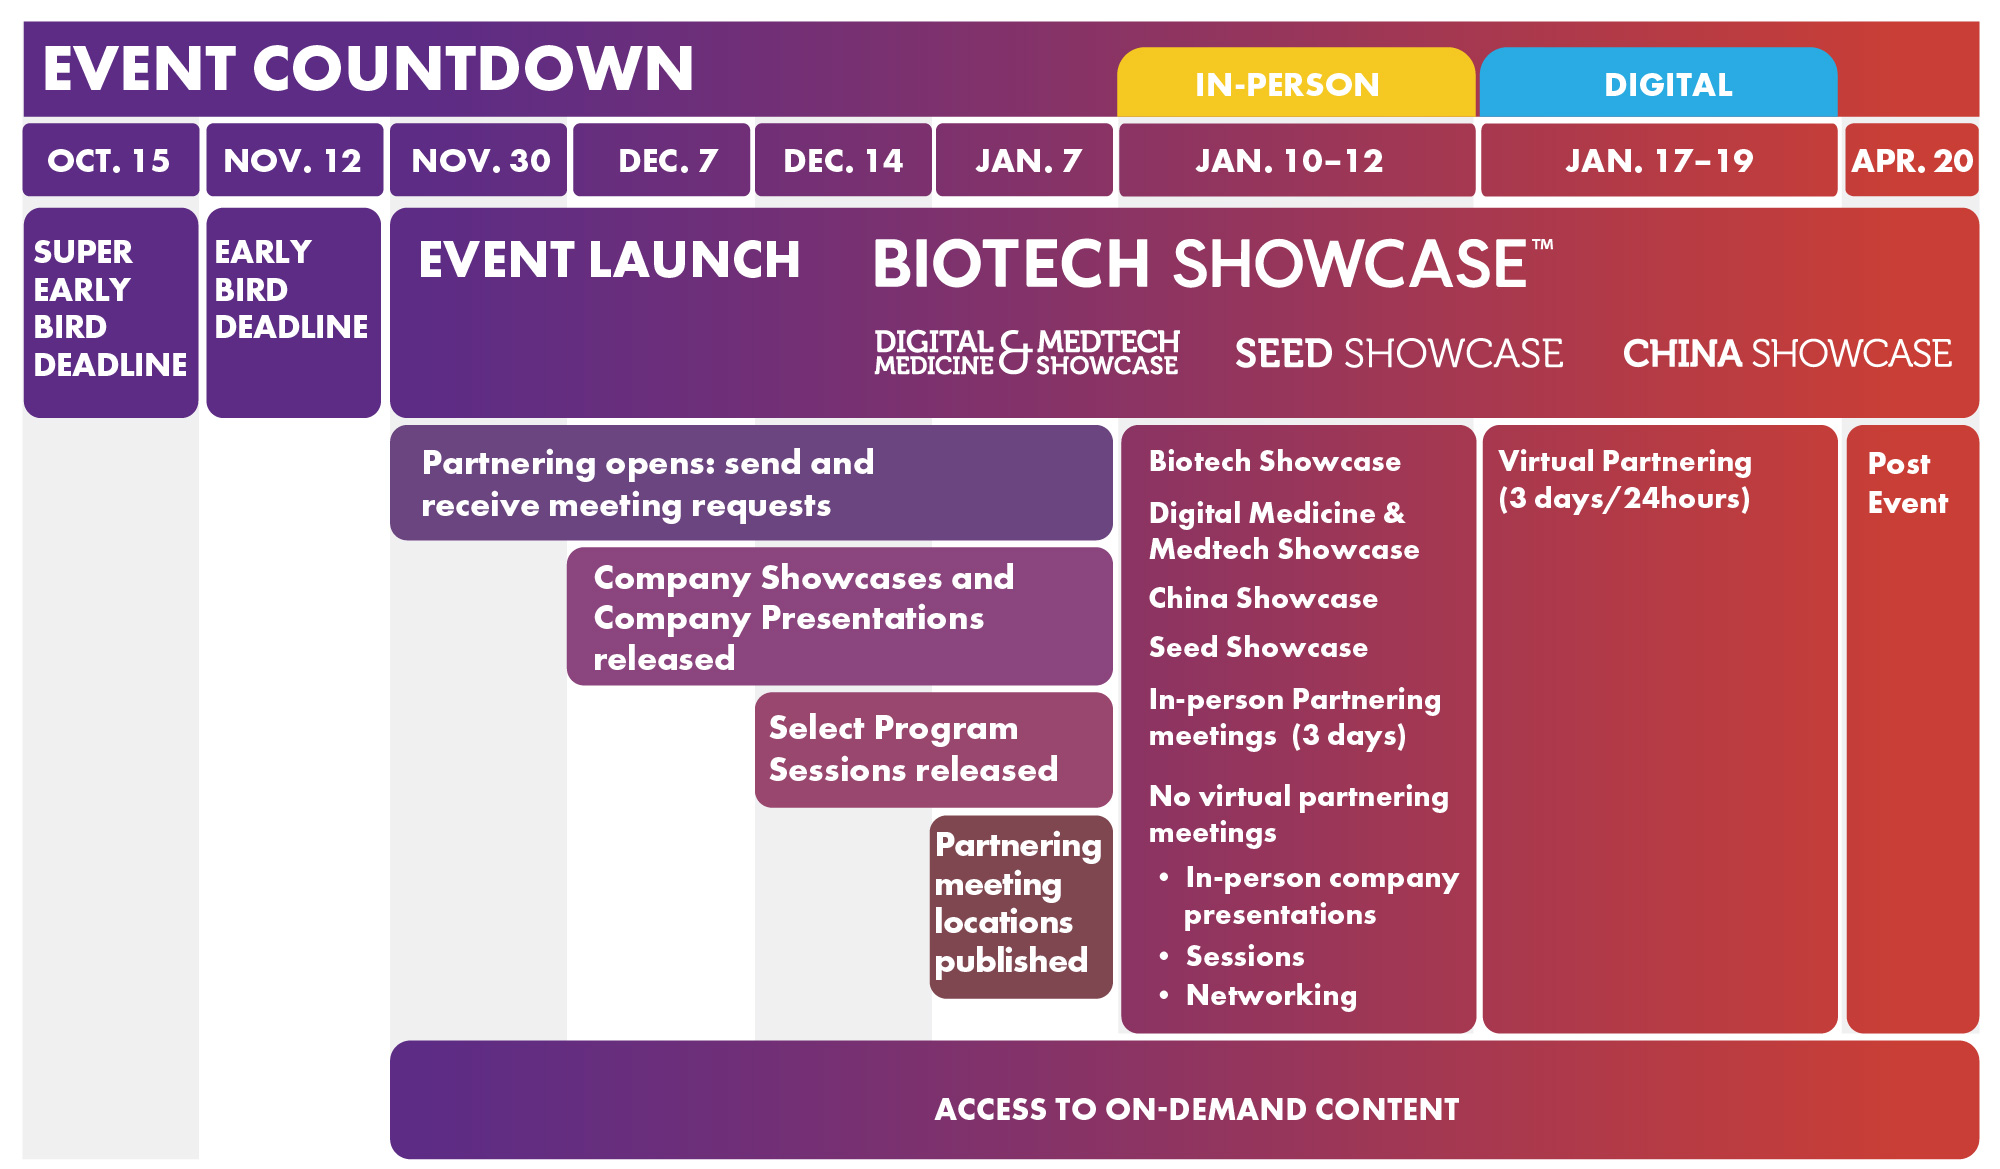 About Biotech Showcase